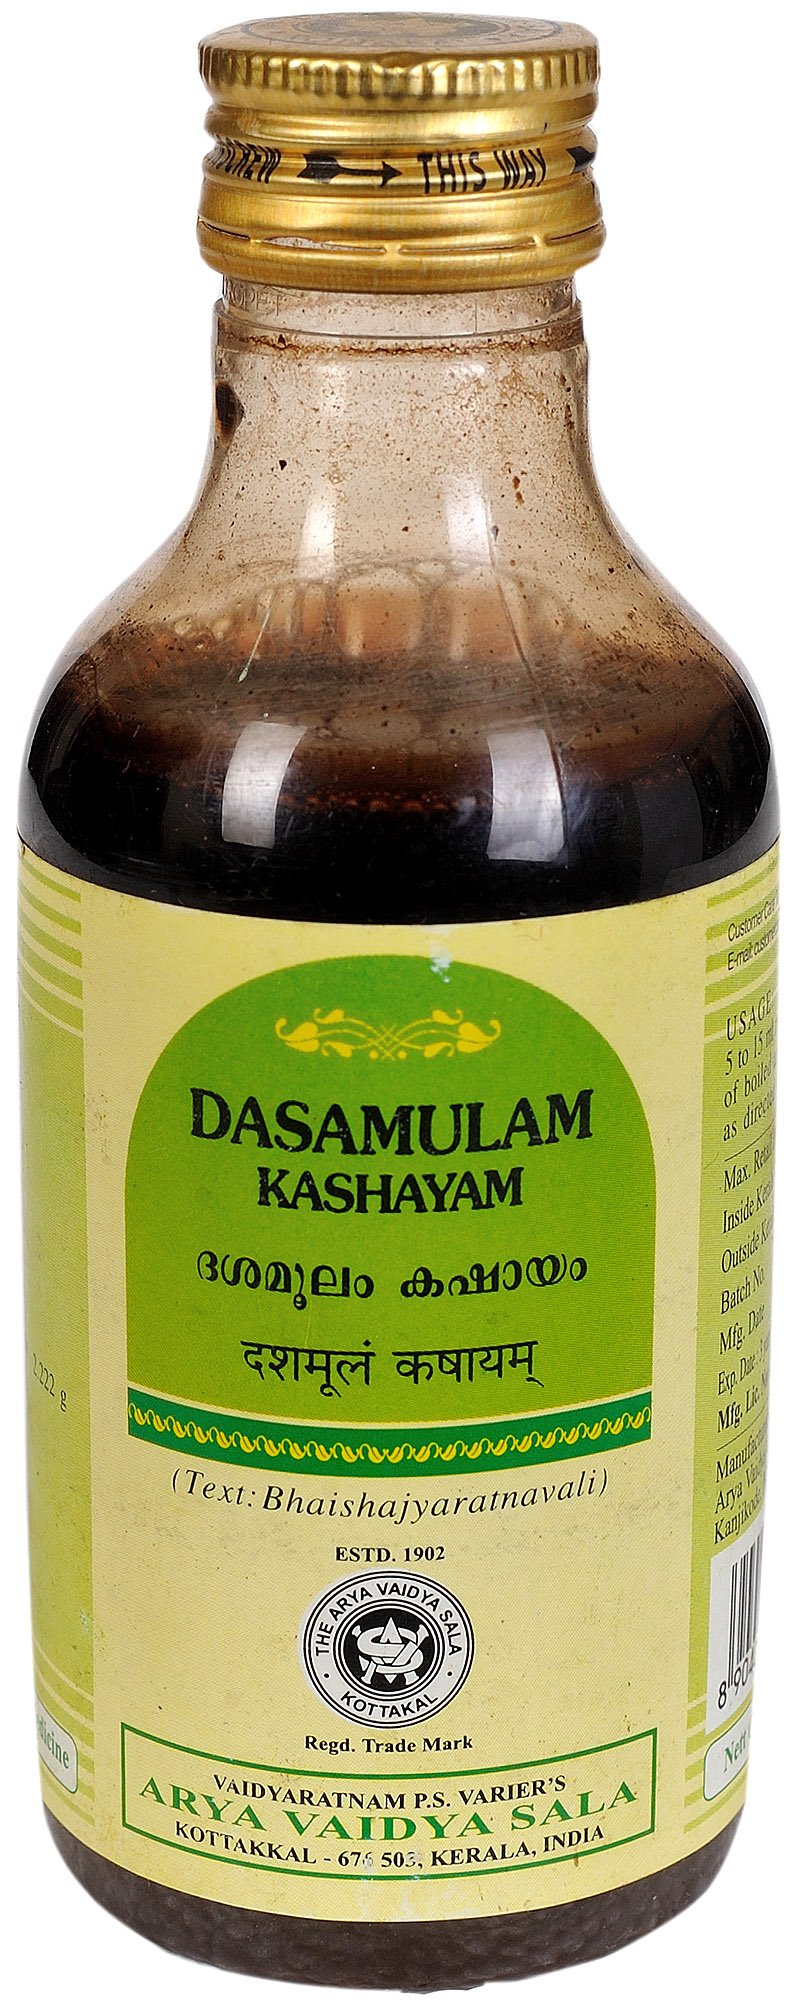 Dasamulam Kashayam - book cover